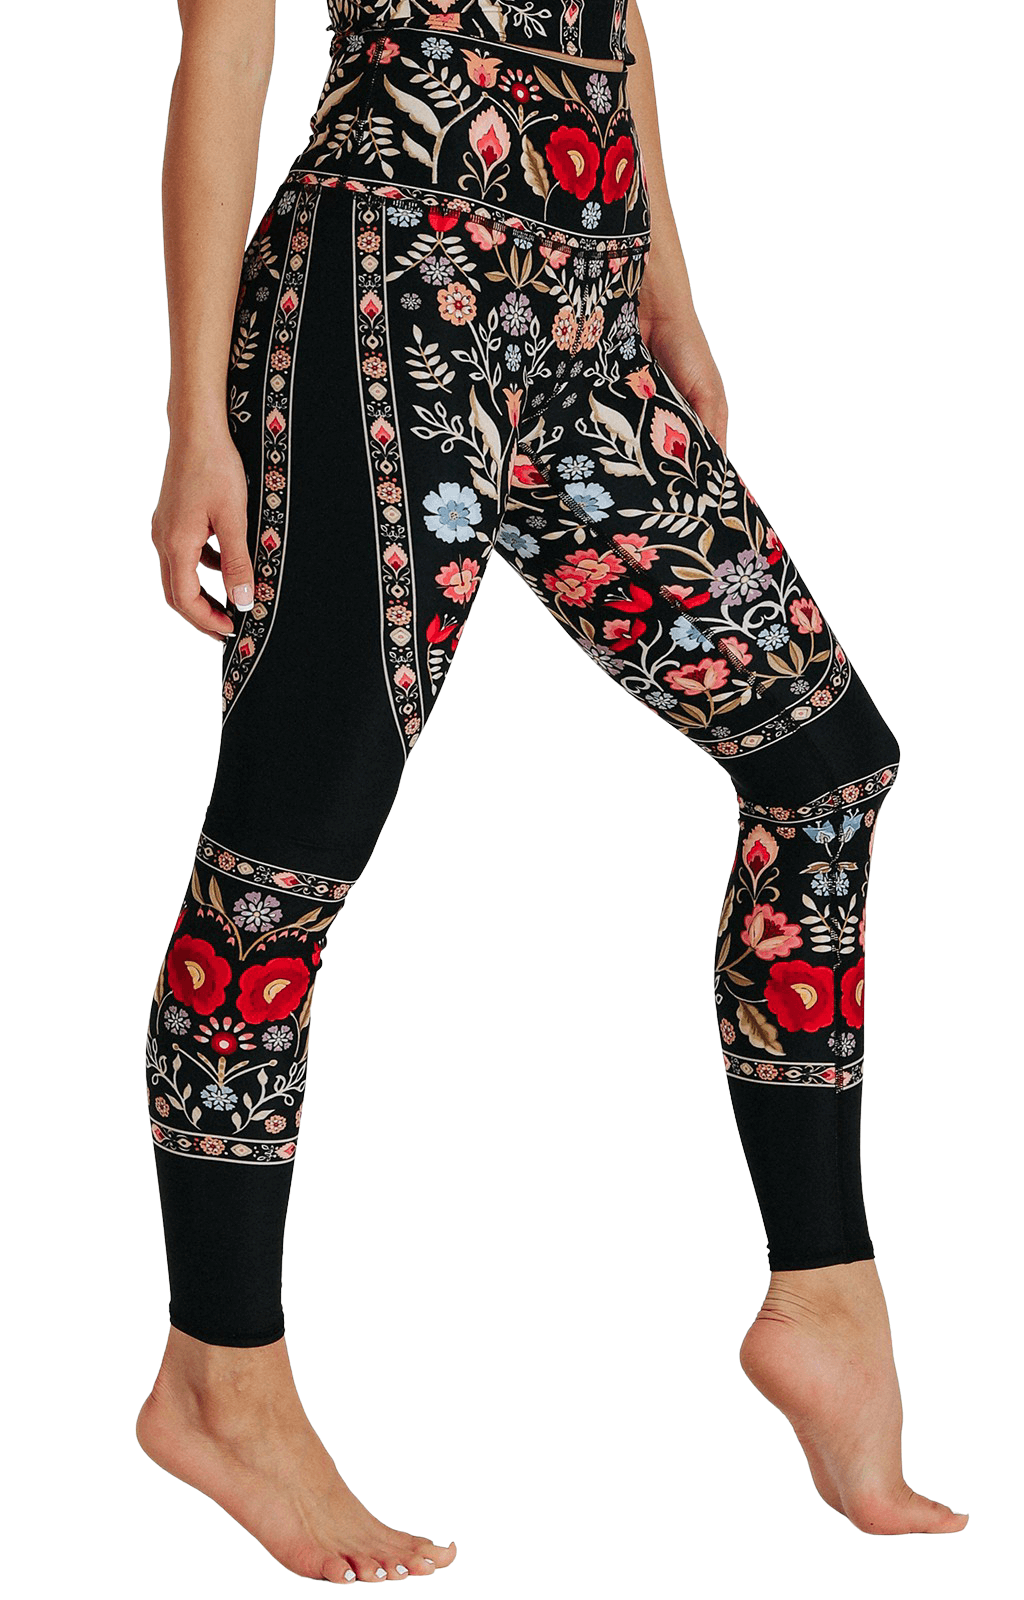 Rustica Eco-Friendly Women's Printed Yoga Leggings